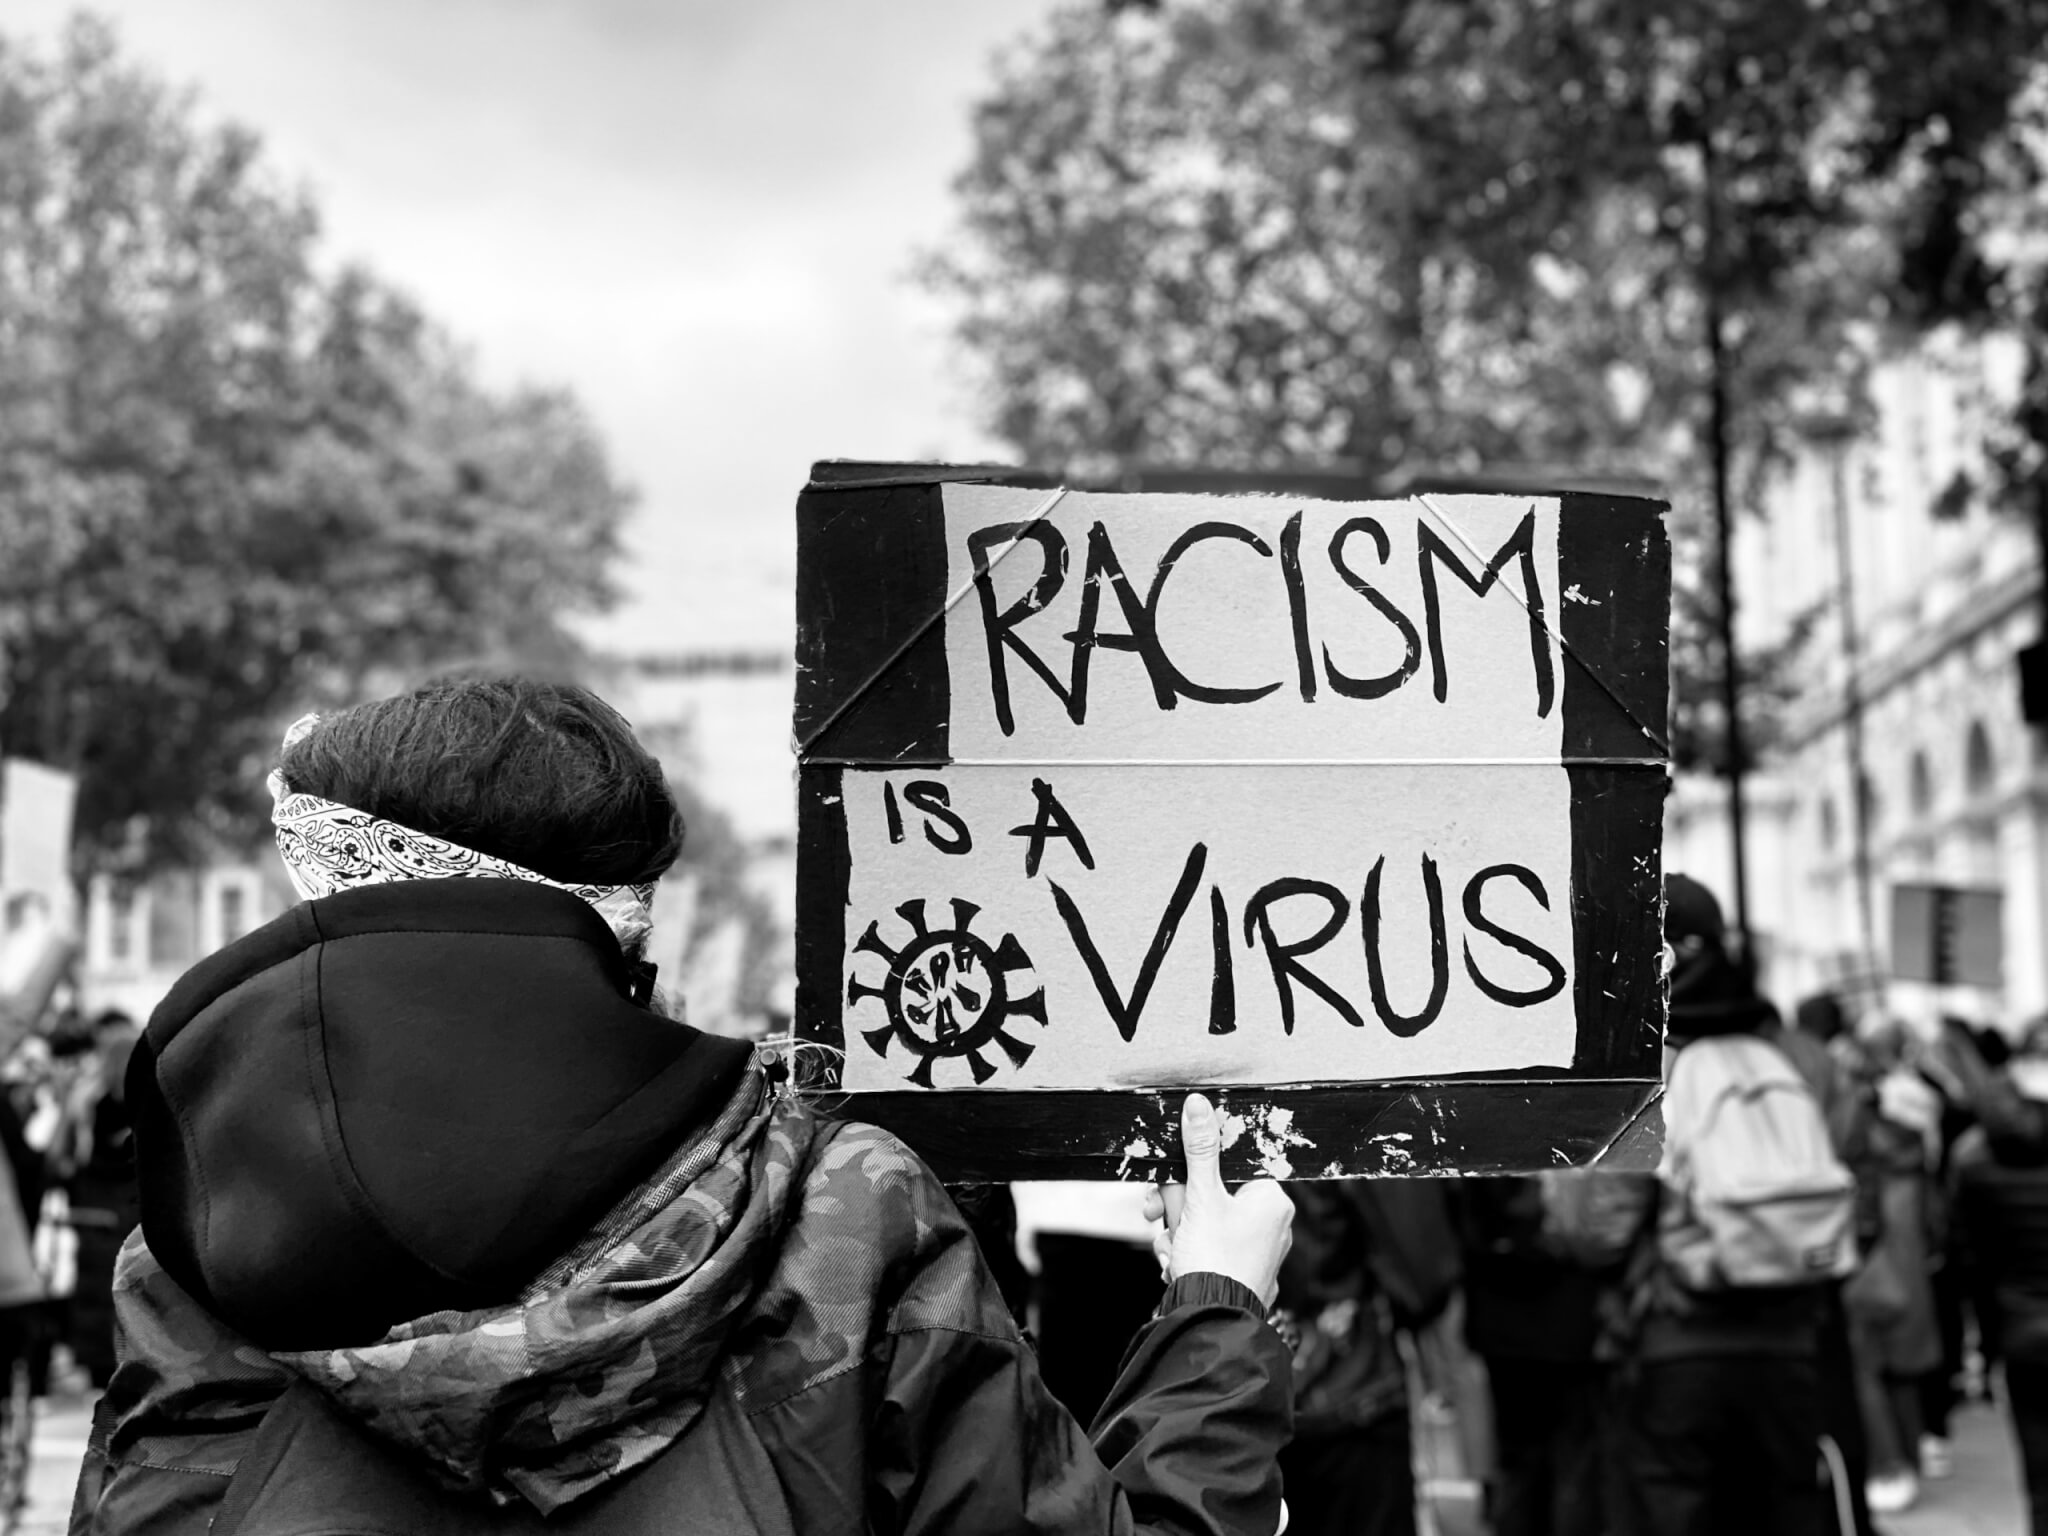 'Racism is a virus' sign at Black Lives Matter protest